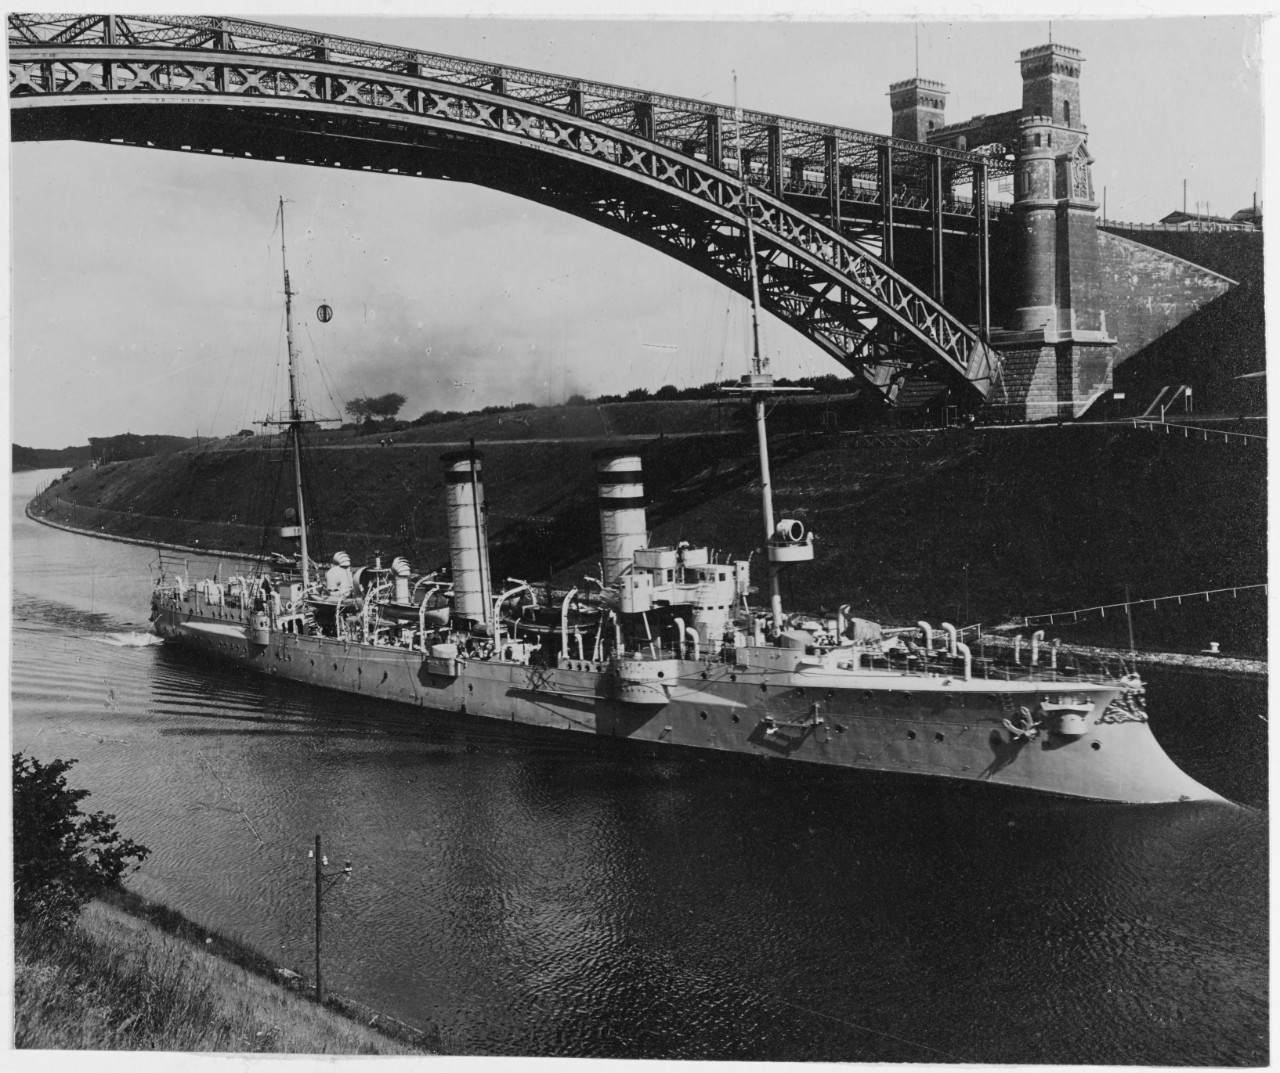 FRAUENLOB (German light cruiser, 1902-1916)